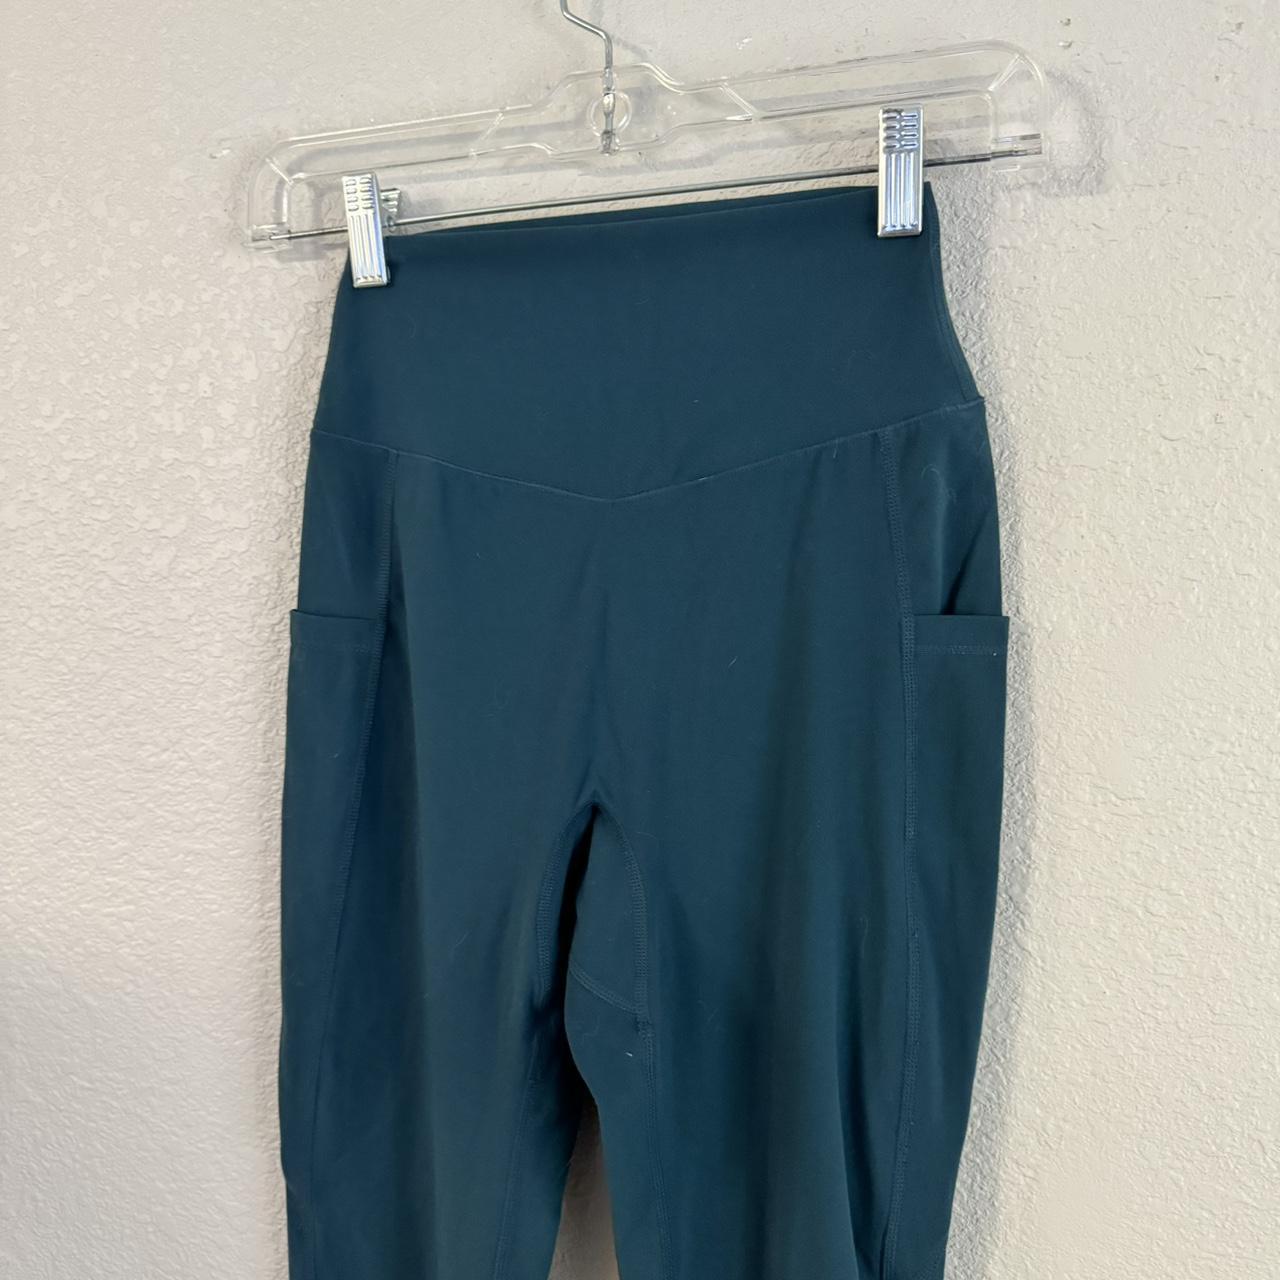 Teal Buffbunny leggings with pockets! High waisted - Depop